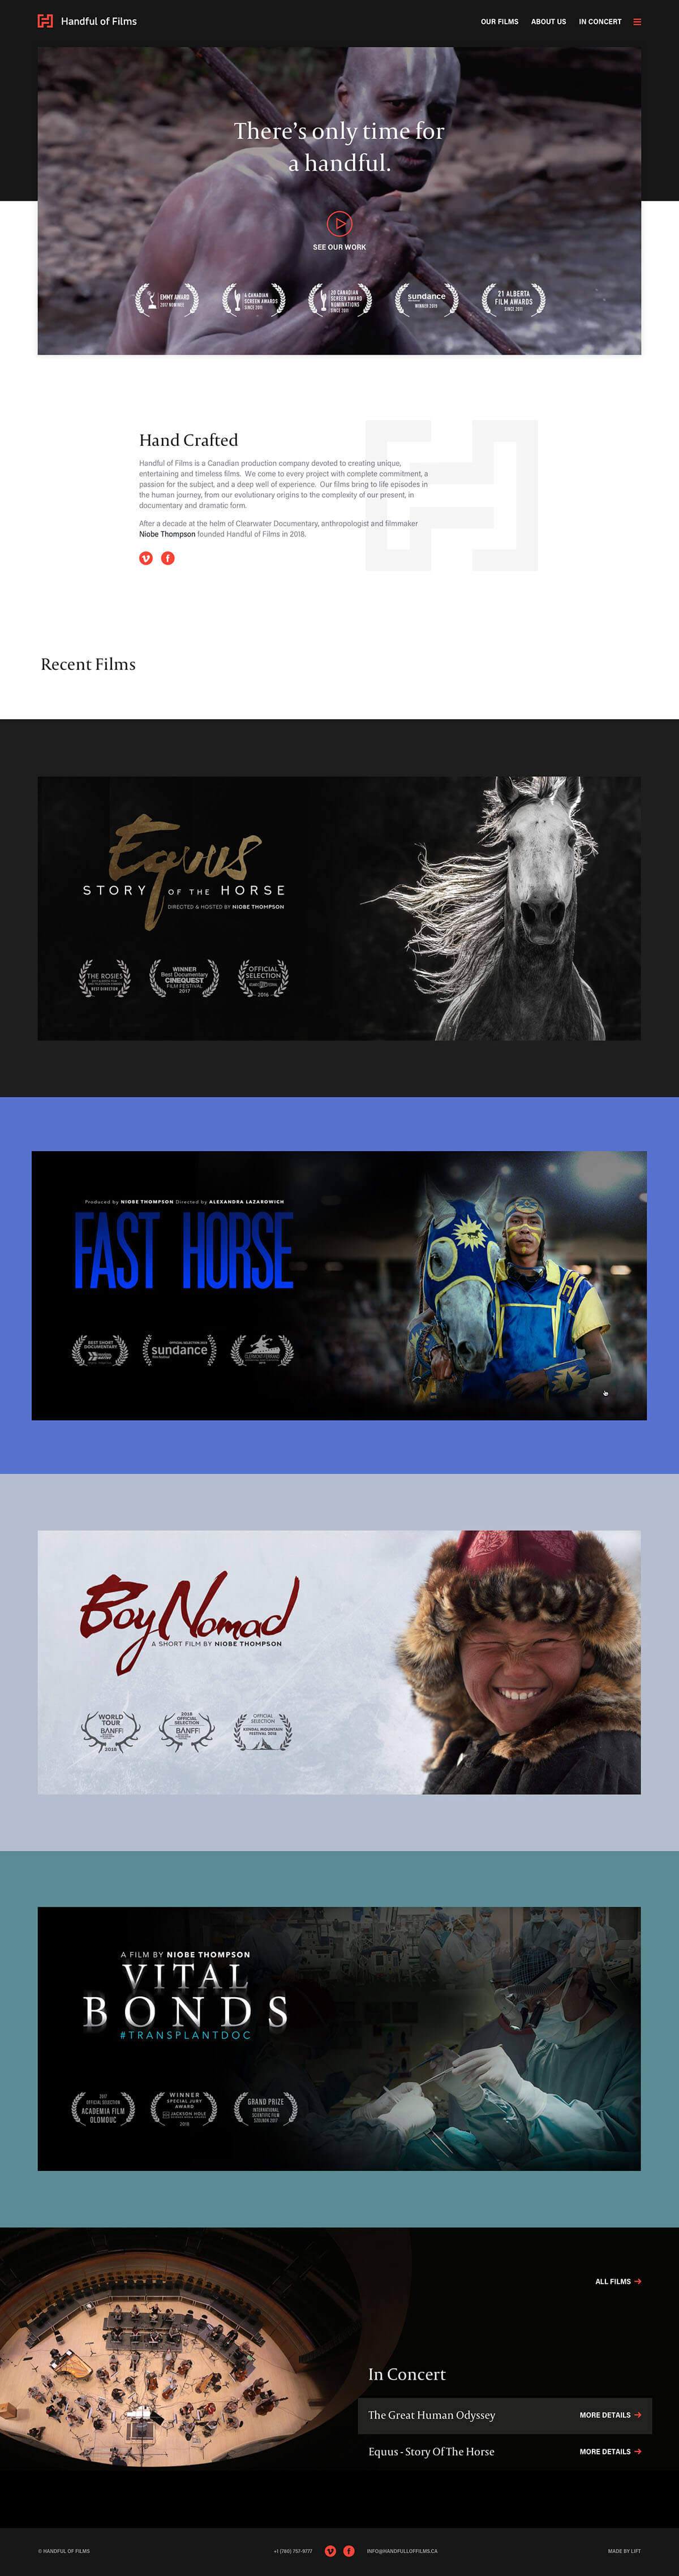 Responsive desktop screenshot of the Handful of Films 